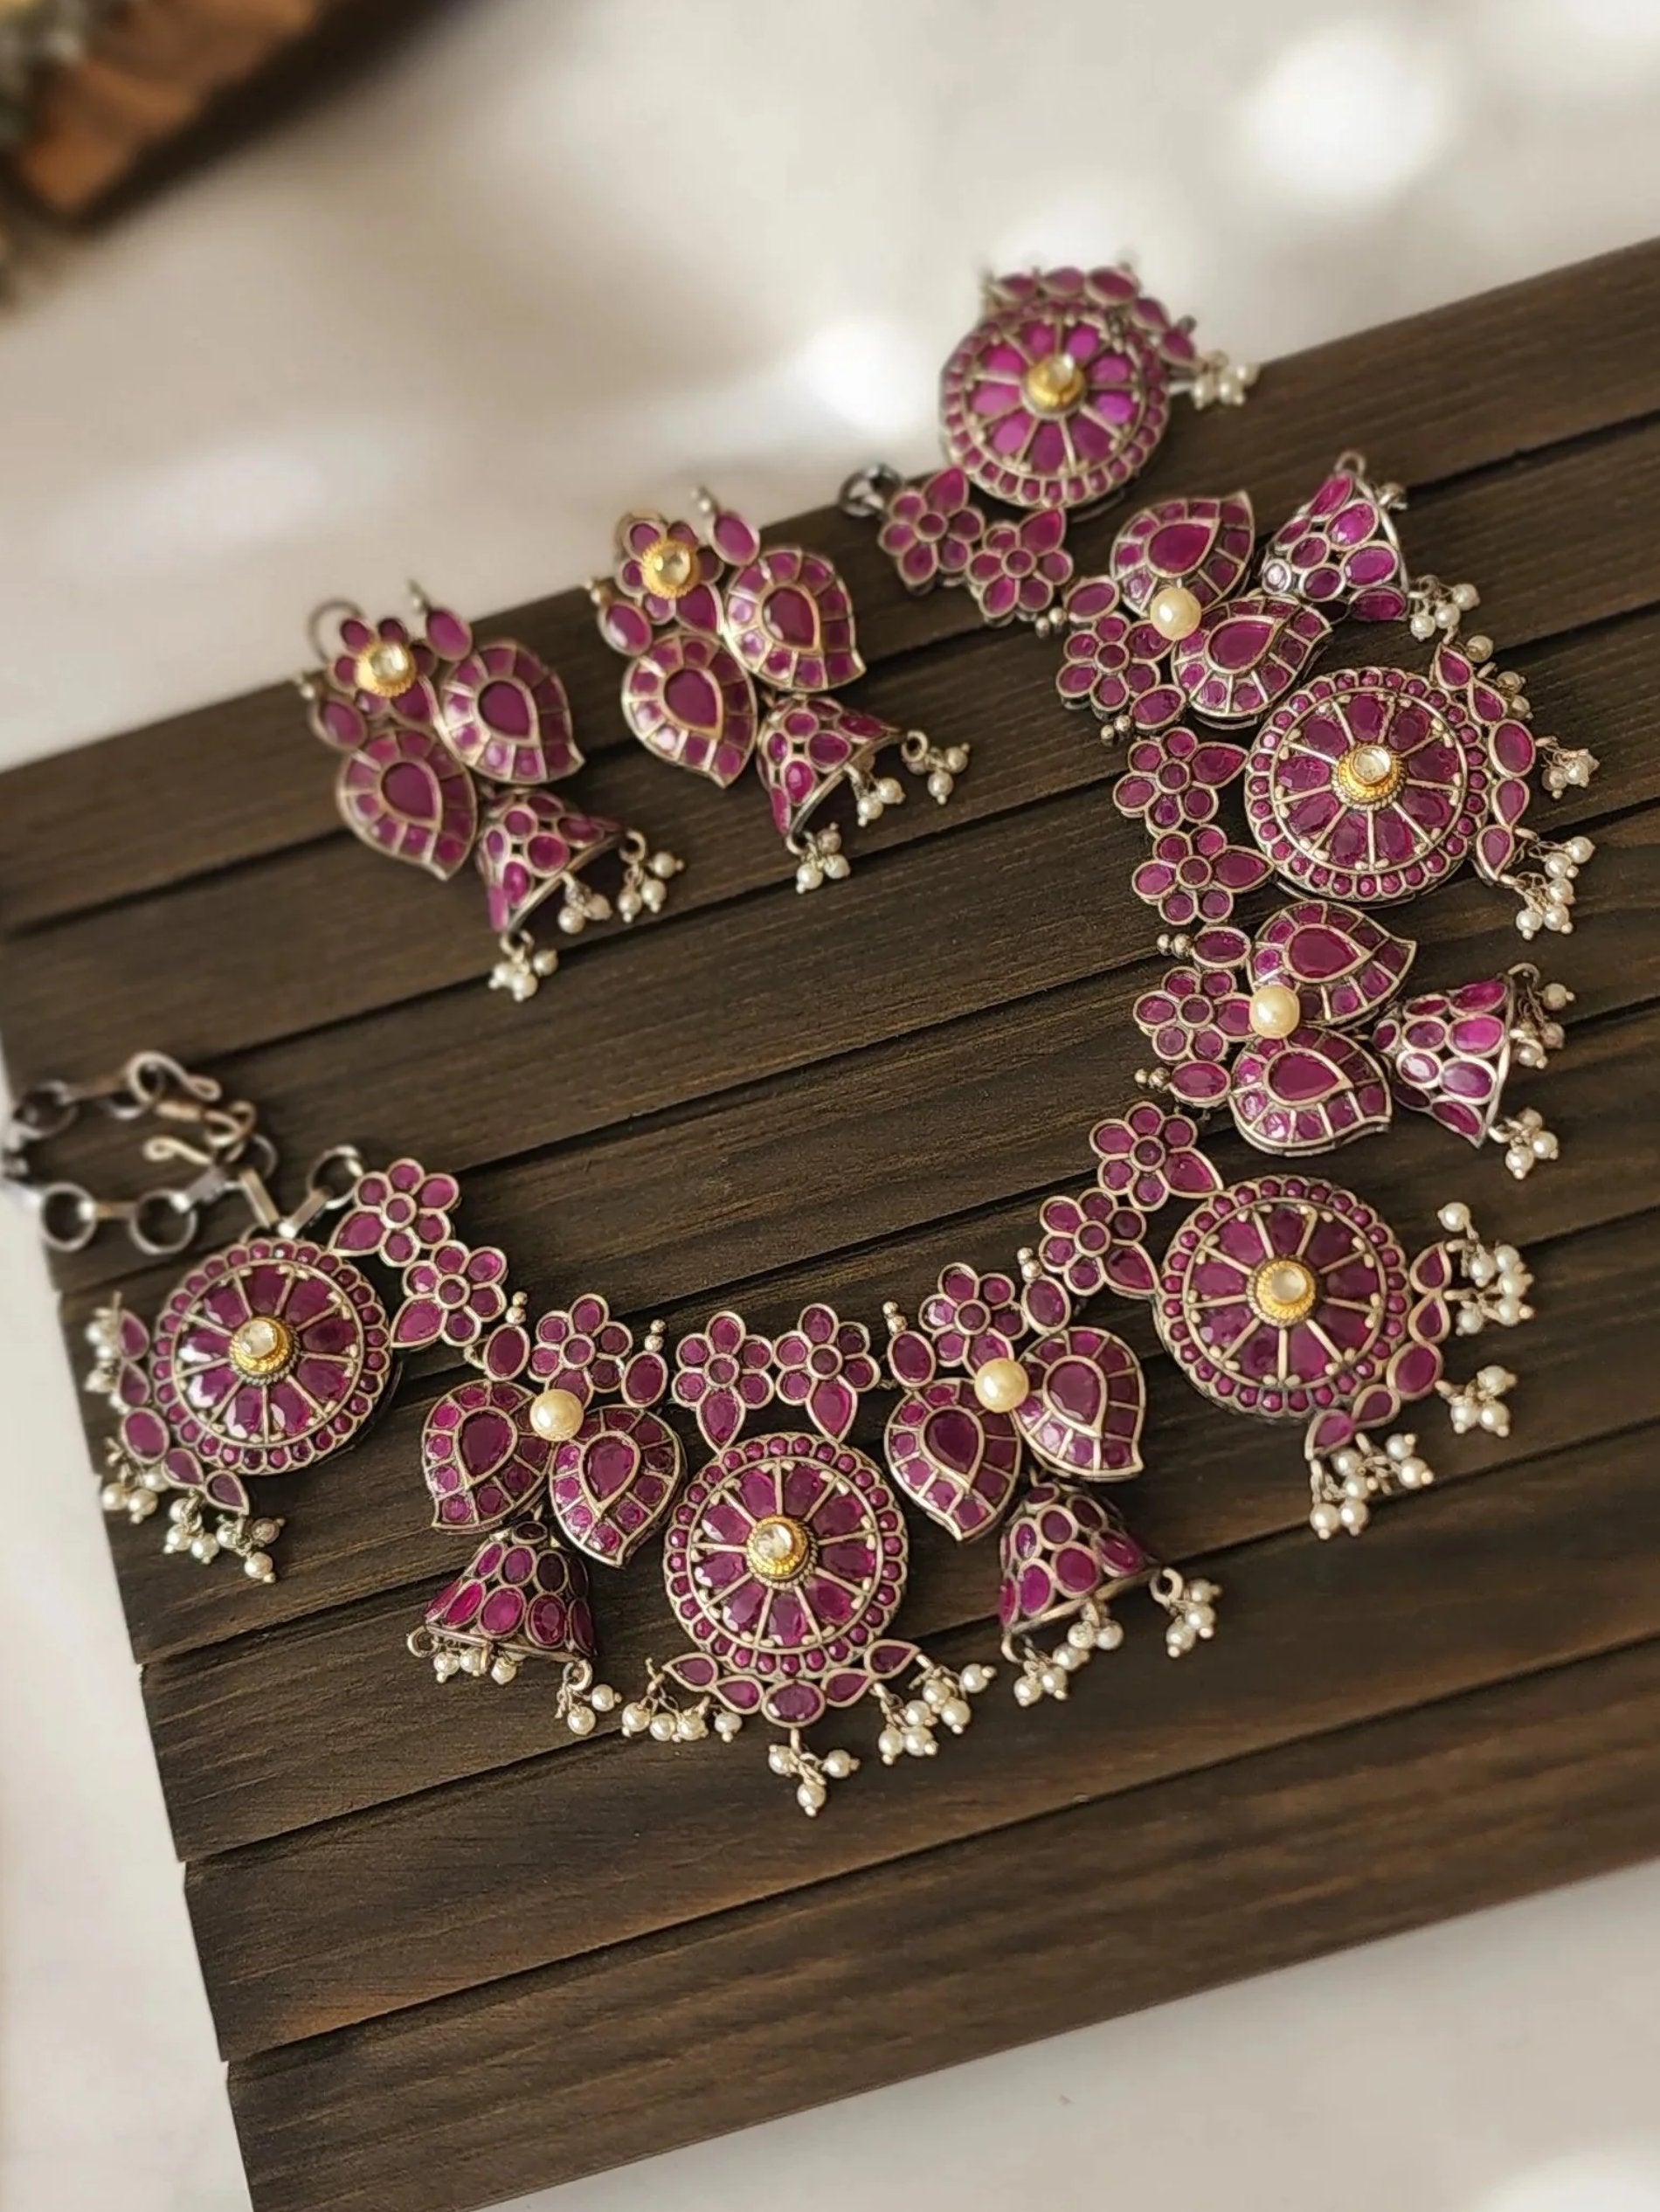 Aarna fusion handmade necklace set